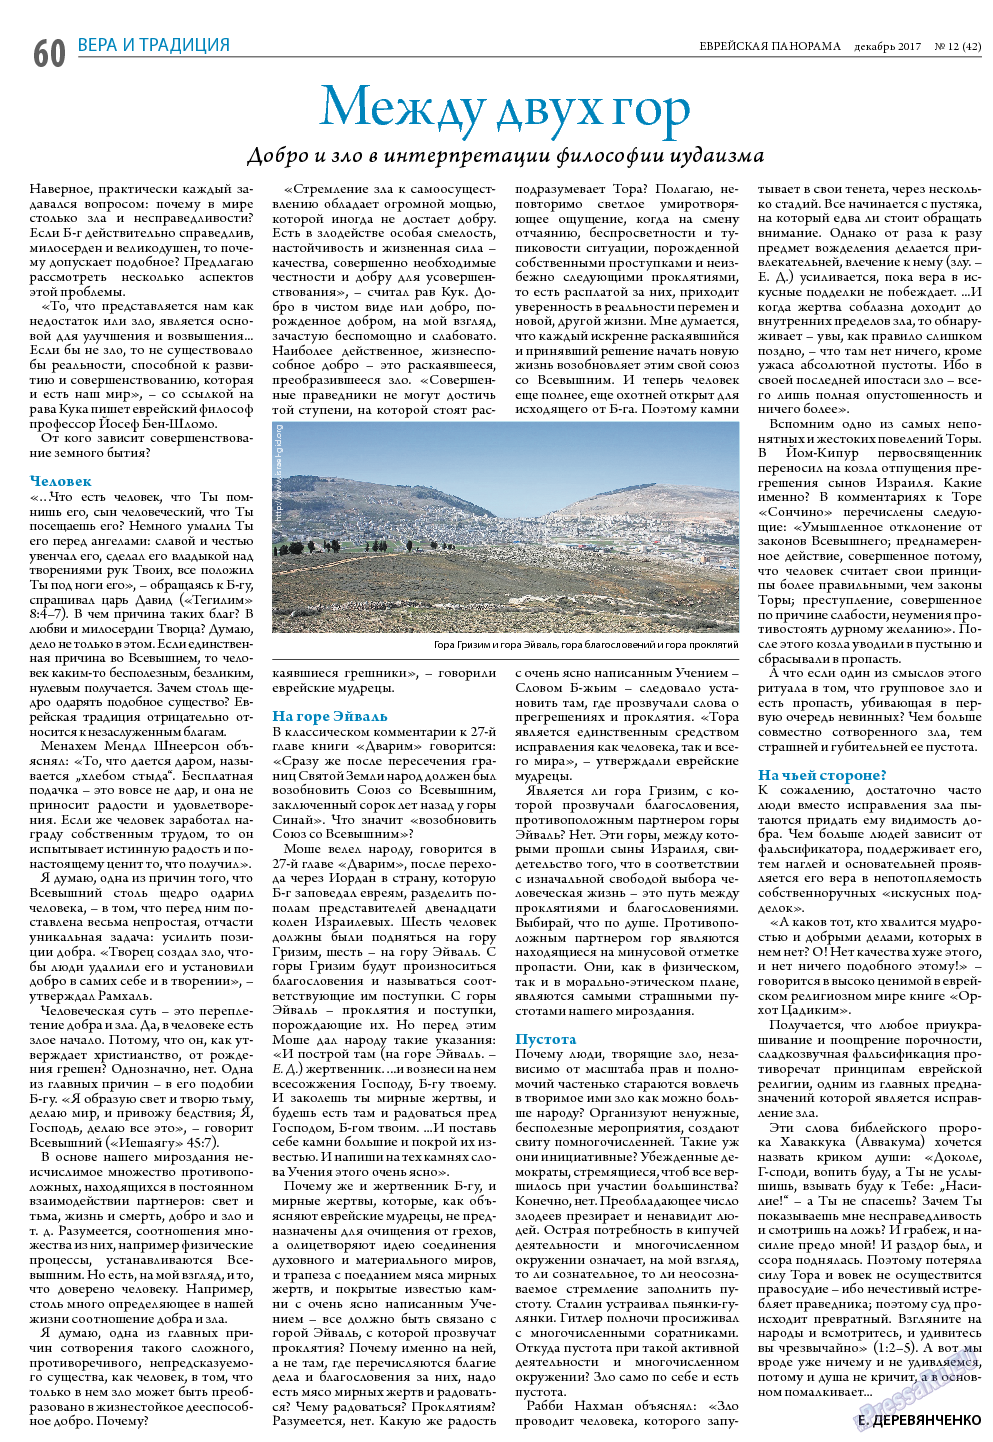 Еврейская панорама, газета. 2017 №12 стр.60